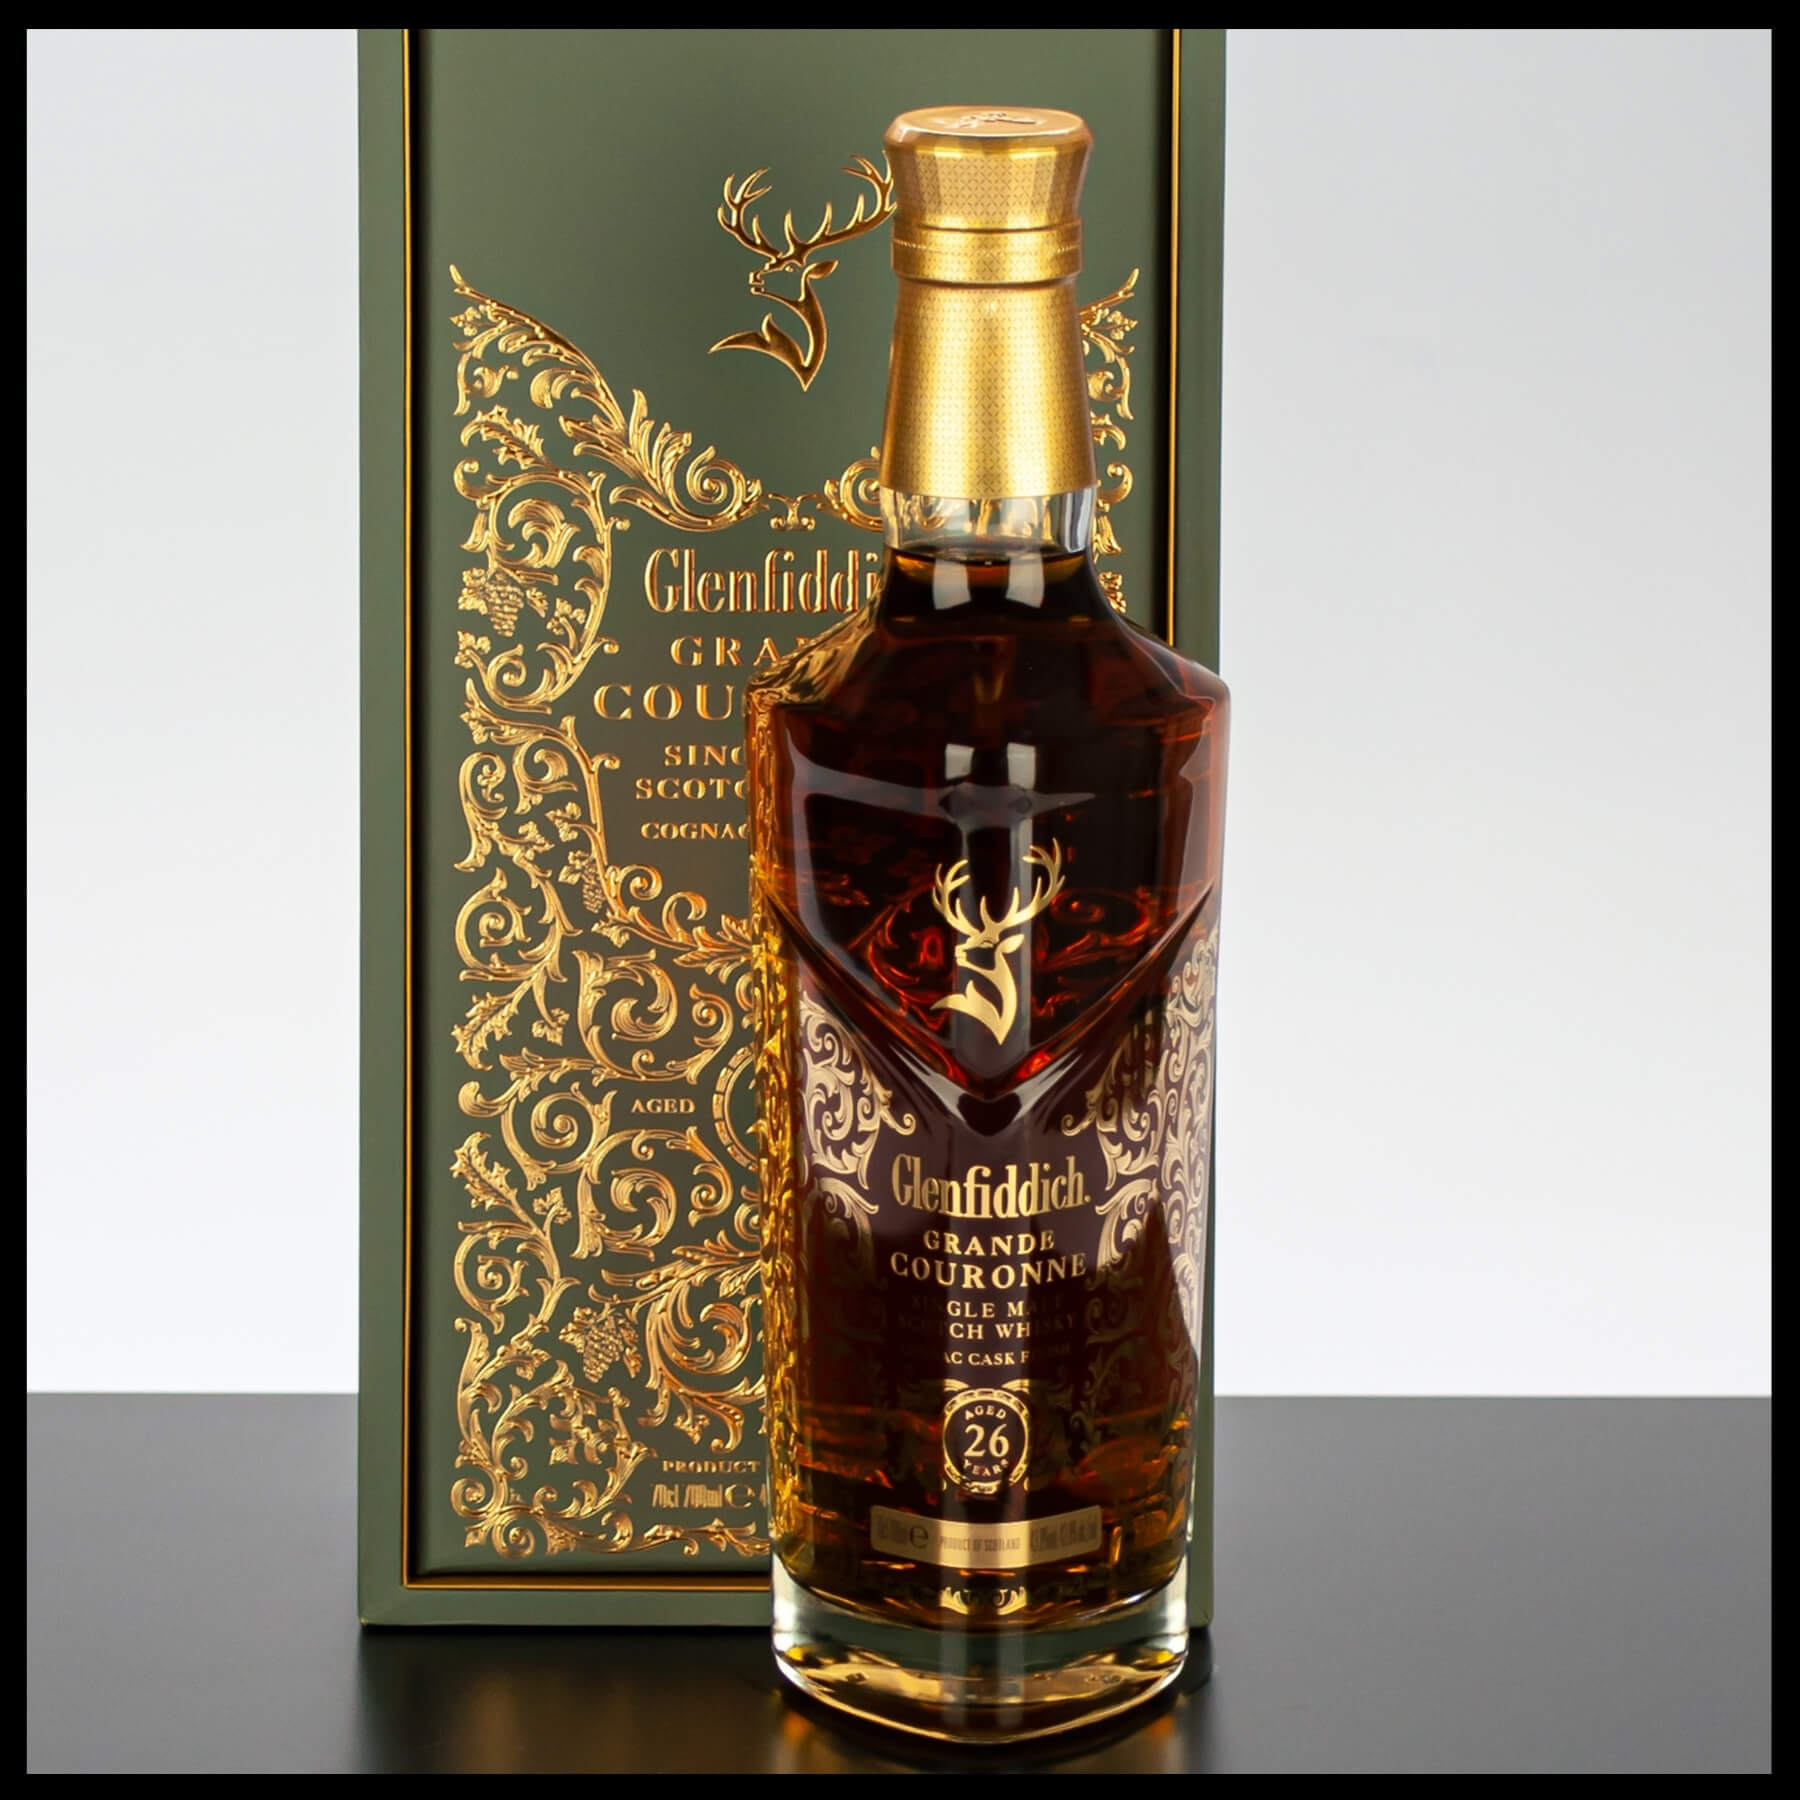 Glenfiddich 26 YO Grande Couronne Single Malt Whisky 0,7L - 43,8% Vol. - Trinklusiv